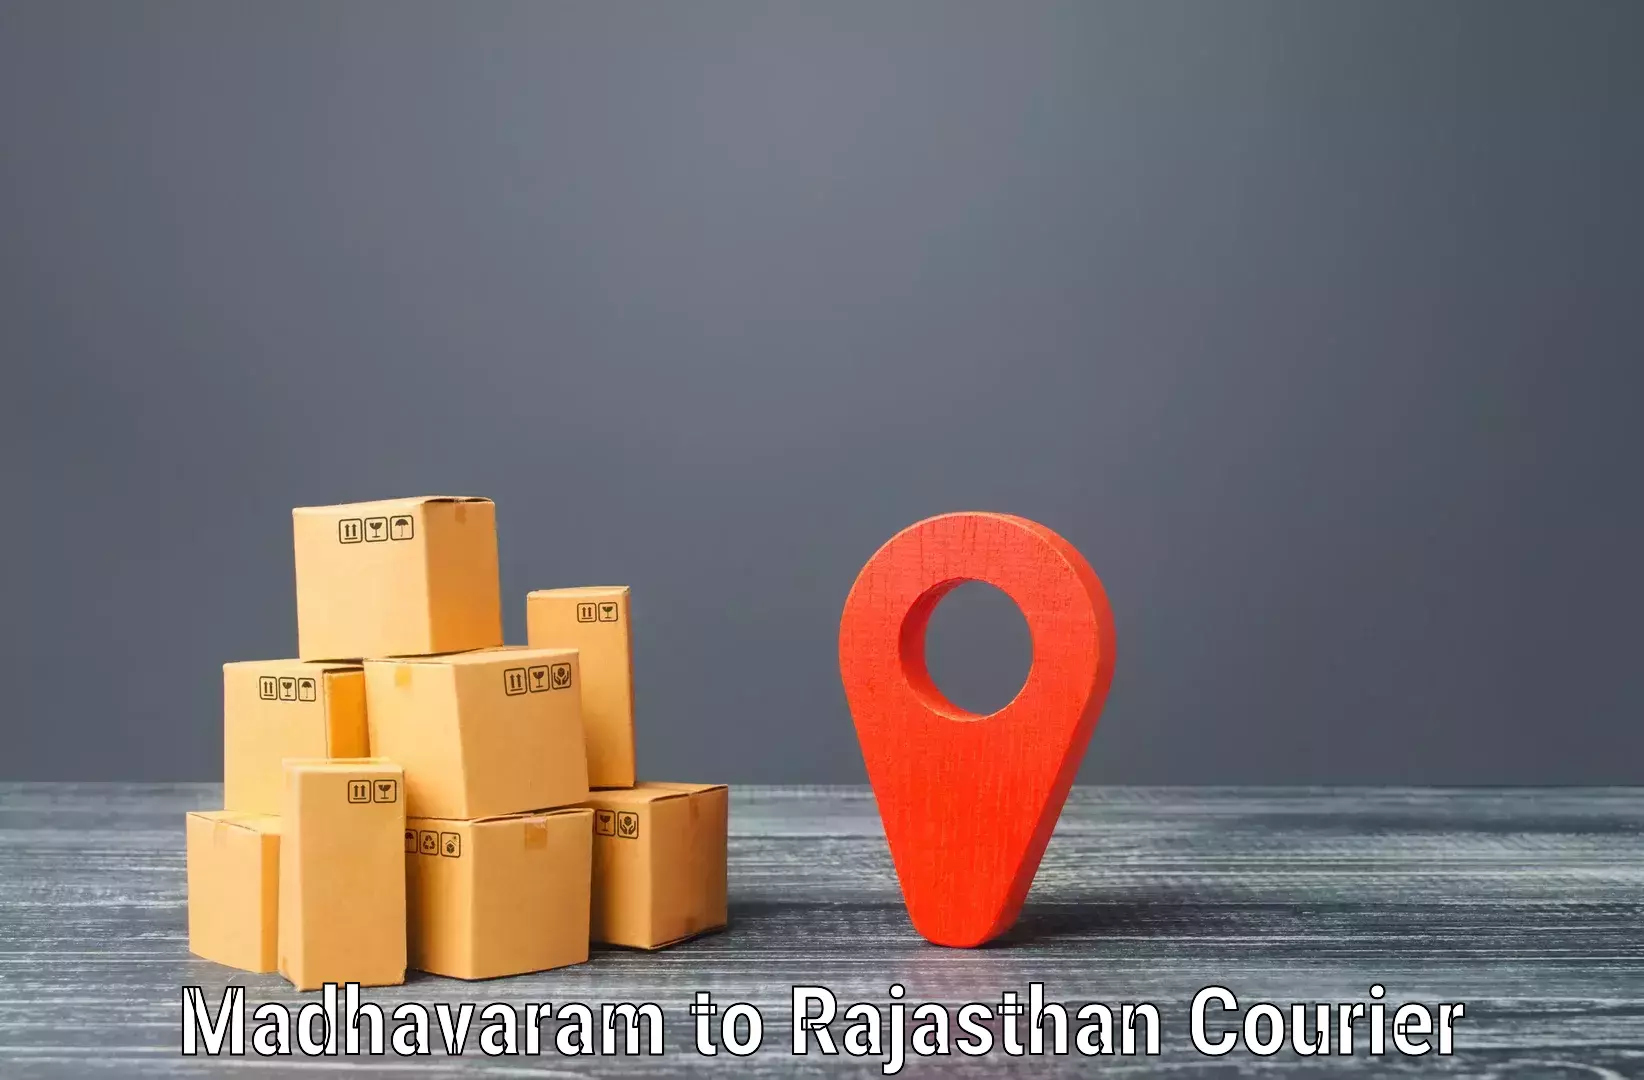 Courier service comparison Madhavaram to Khinwara